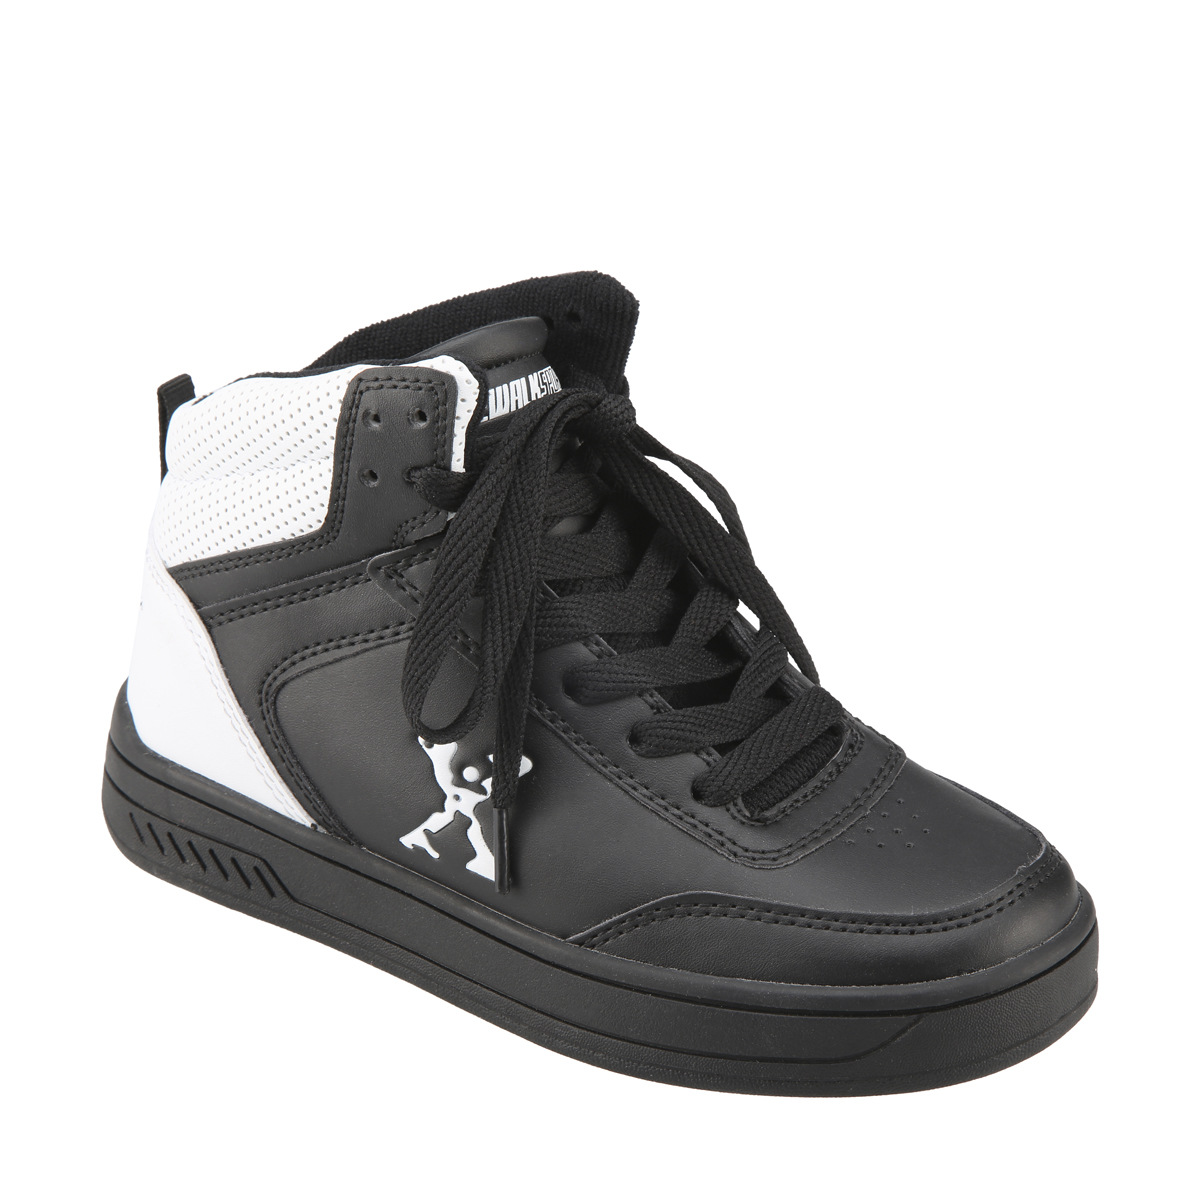 Sidewalk Sports Size 1 Black Skate Shoes